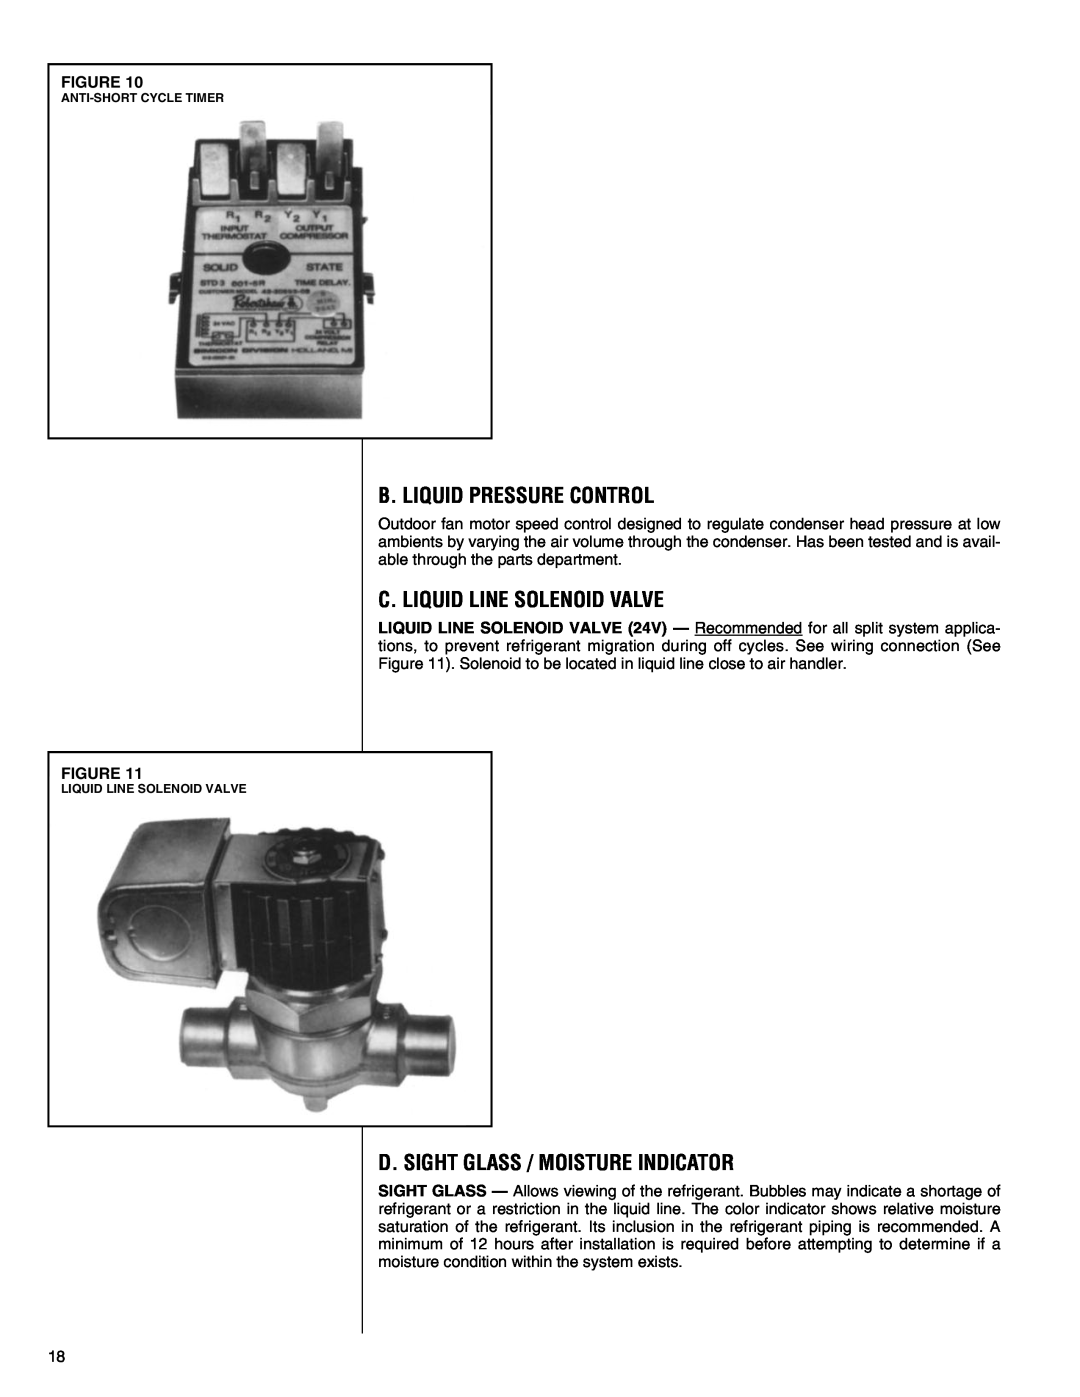 Heat Controller R-410A B. Liquid Pressure Control, C. Liquid Line Solenoid Valve, D. Sight Glass / Moisture Indicator 